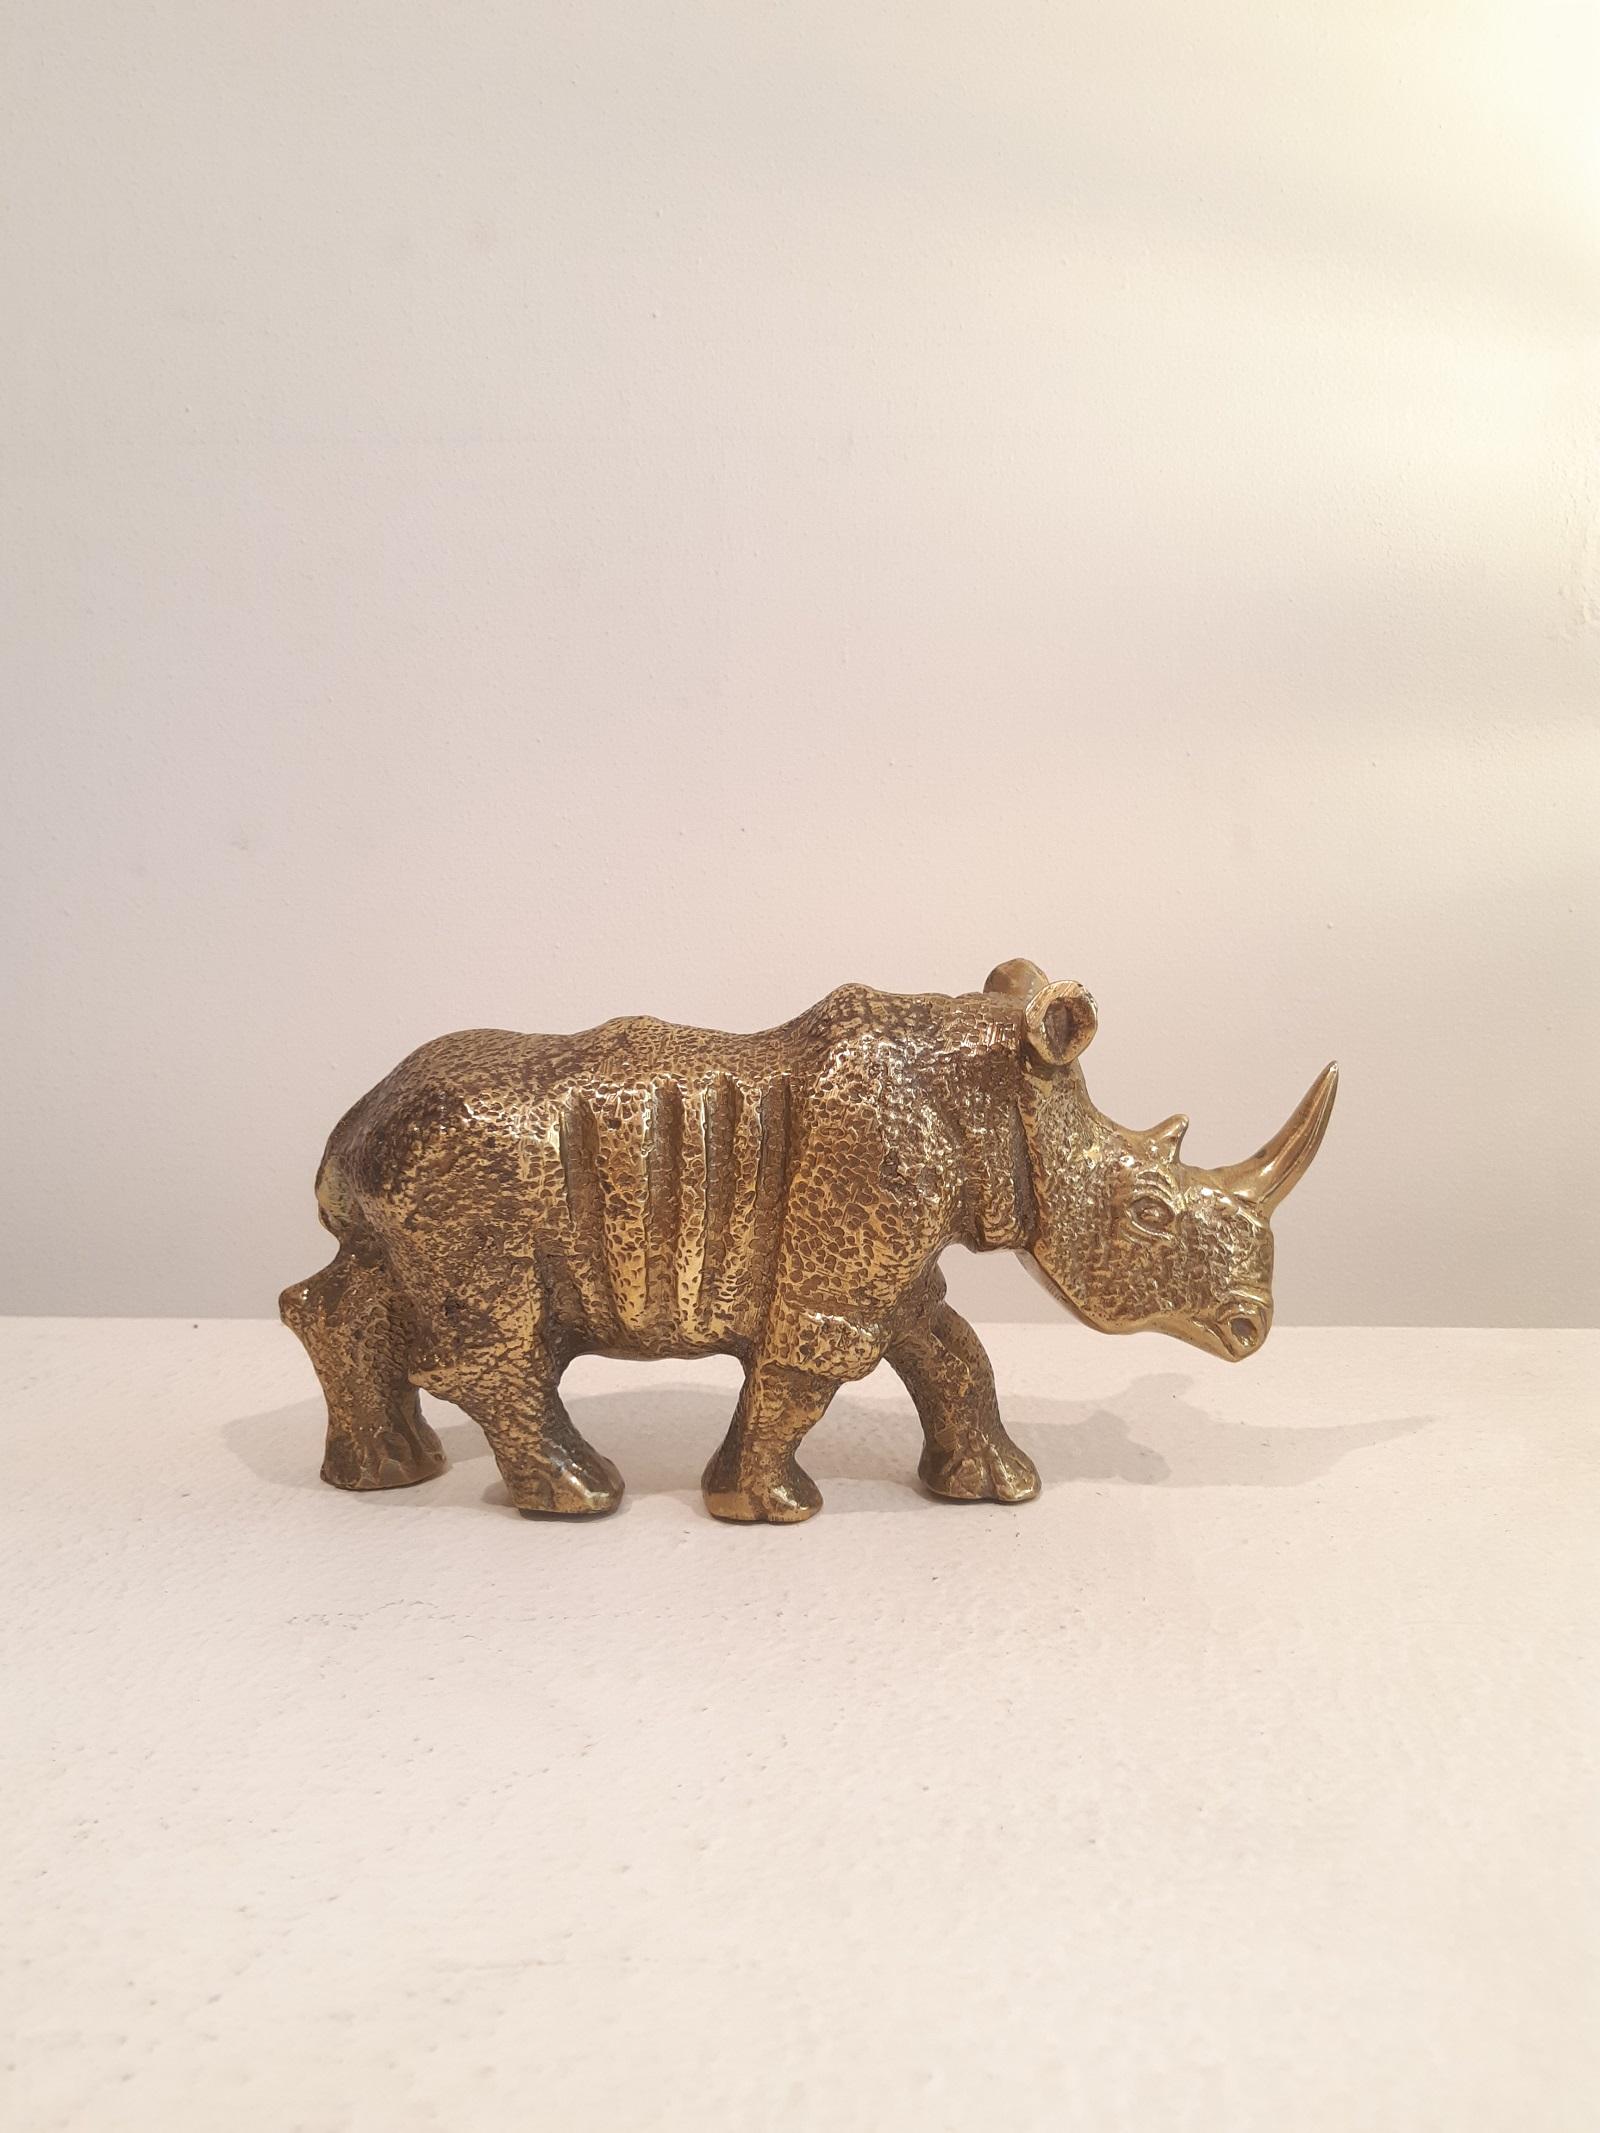 Brass Rhinoceros figurine 1970s Mid-Century Modern sculpture 
Measures: Depth 23cm, width 6cm, height 11cm. Weight 4kg
Good condition.